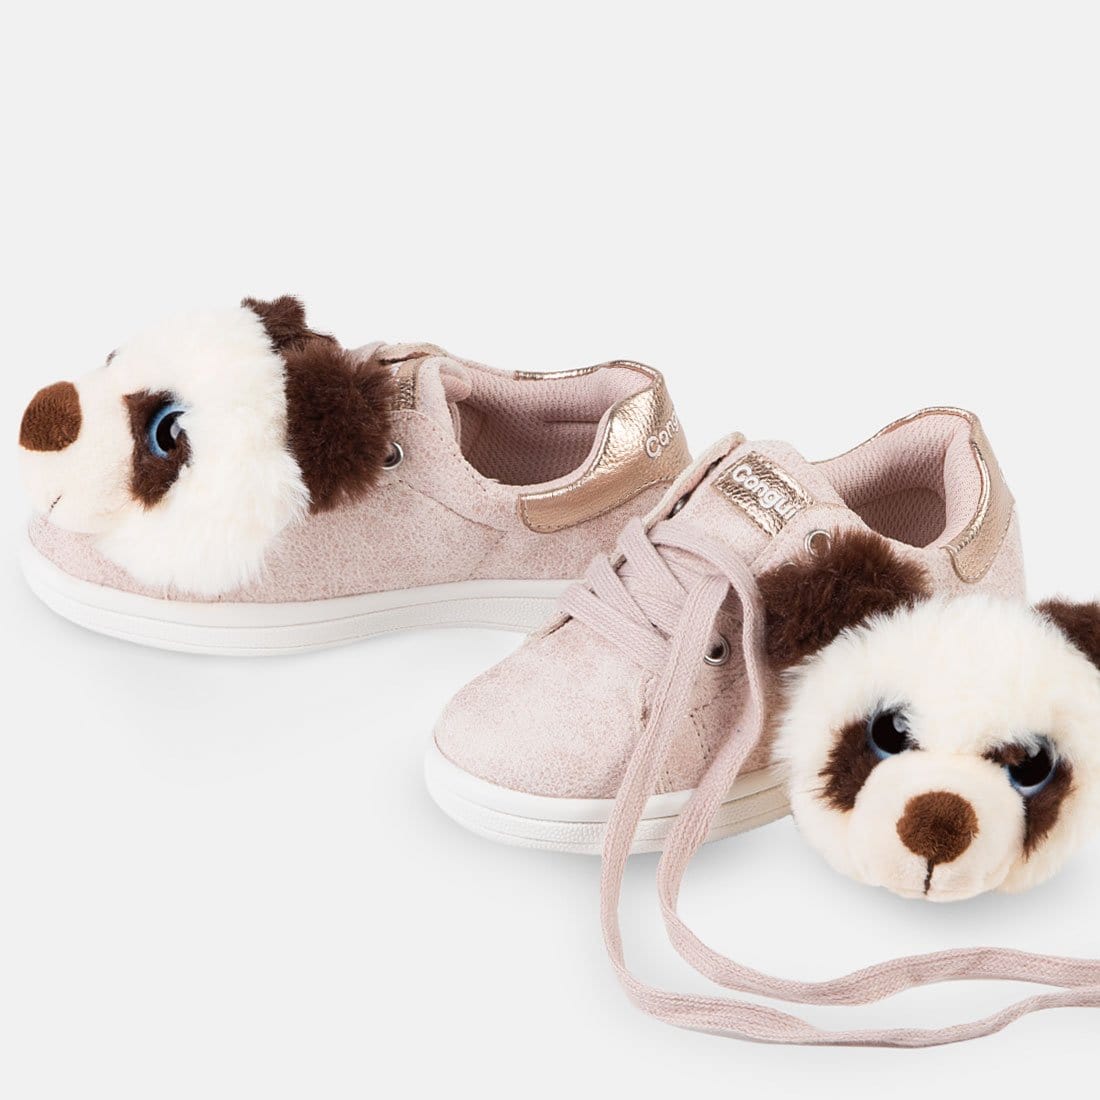 CONGUITOS Shoes Girl's Panda Sneakers